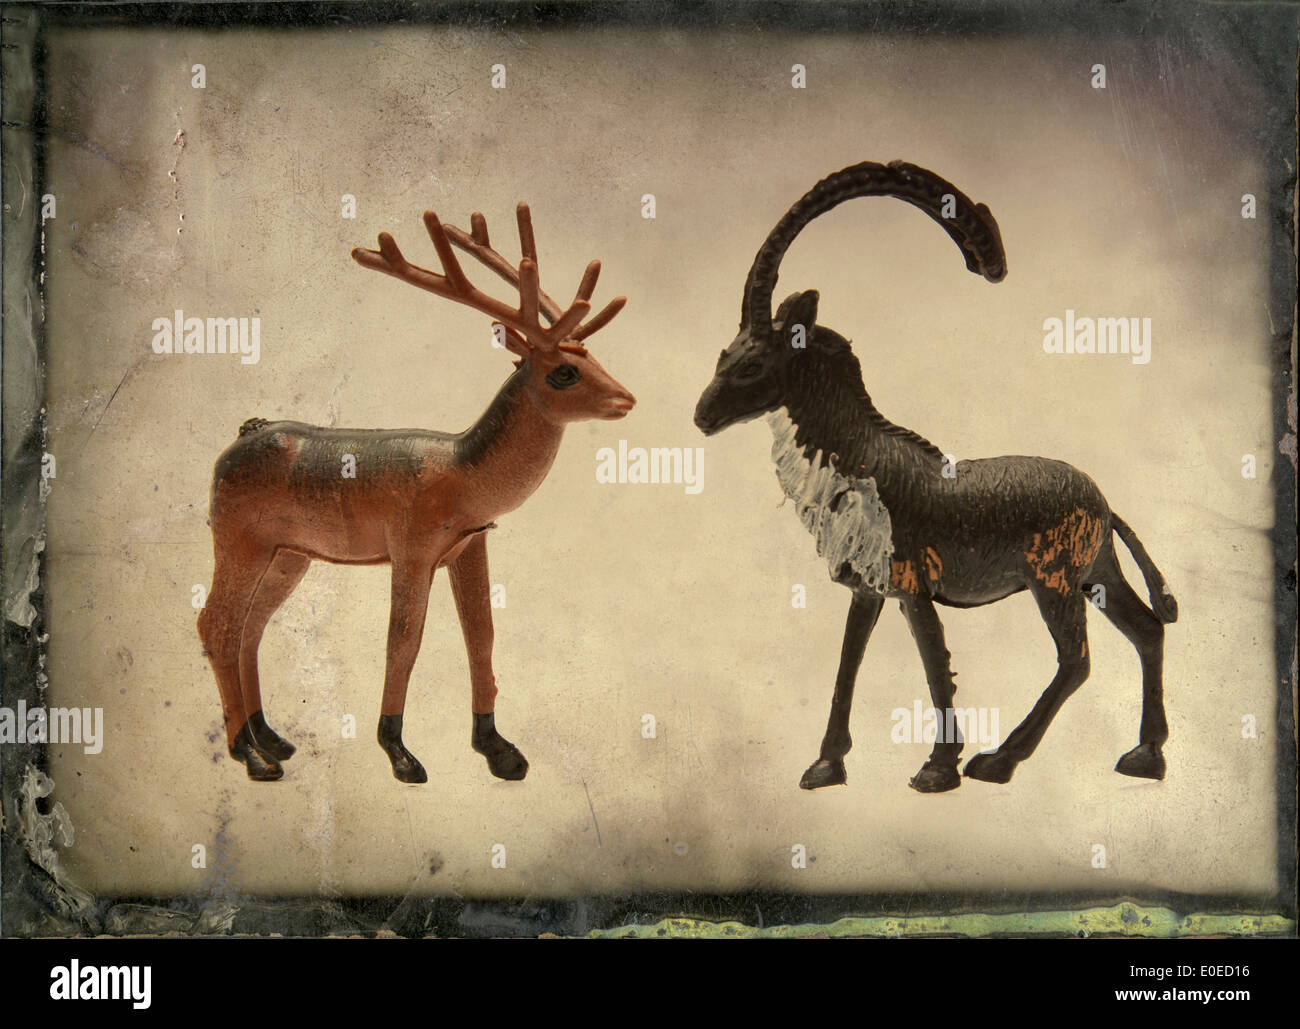 Deer and antelope animal figurines - art-effect image Stock Photo